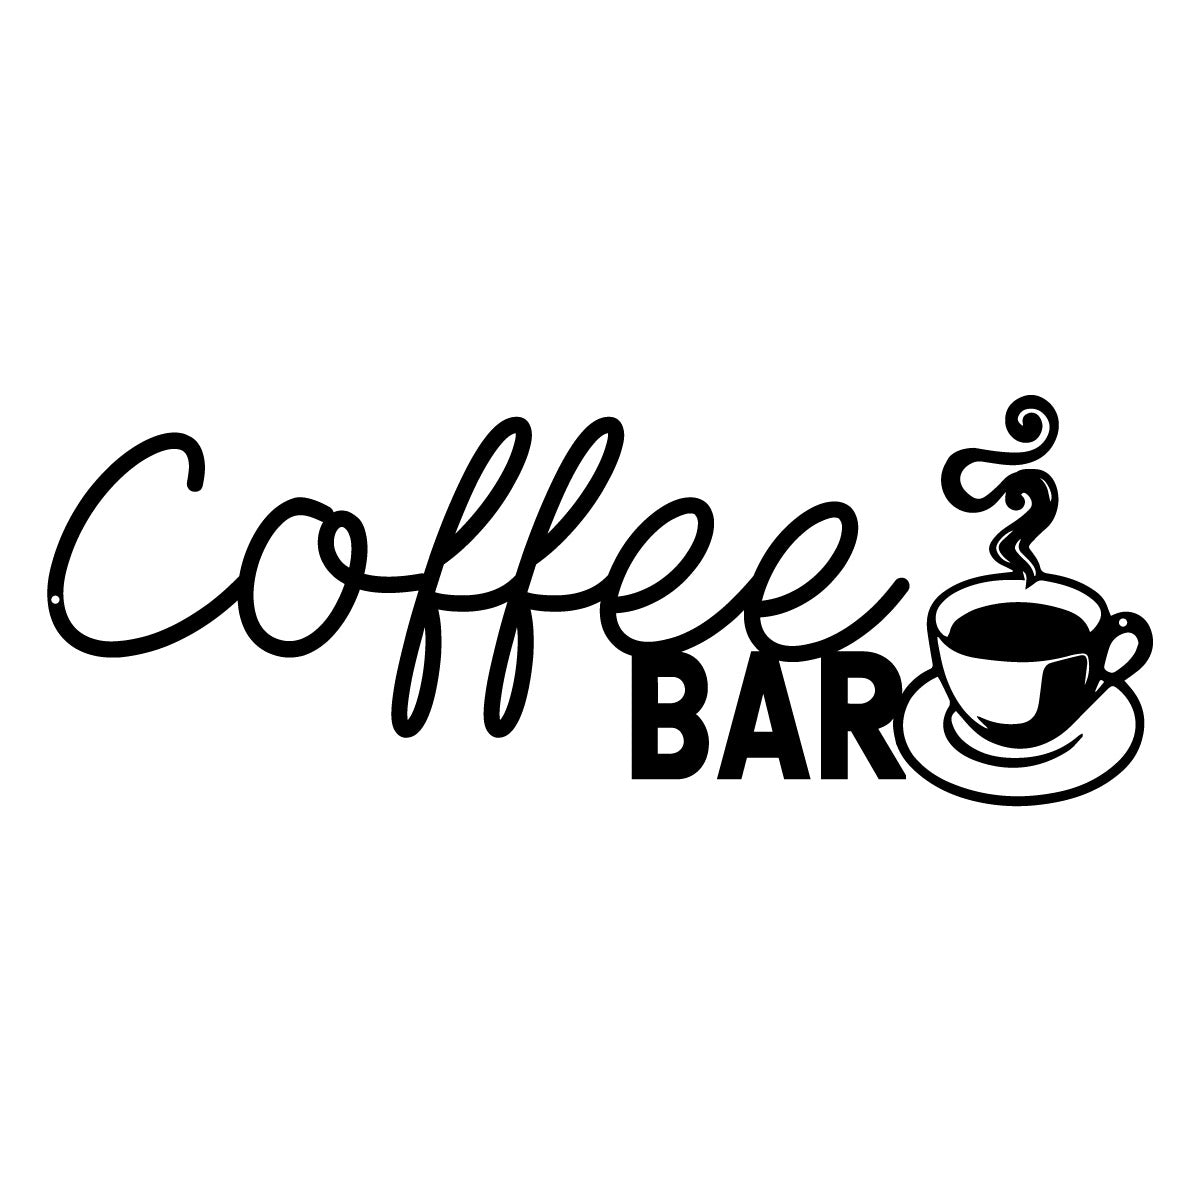 Metal Coffee Bar Sign